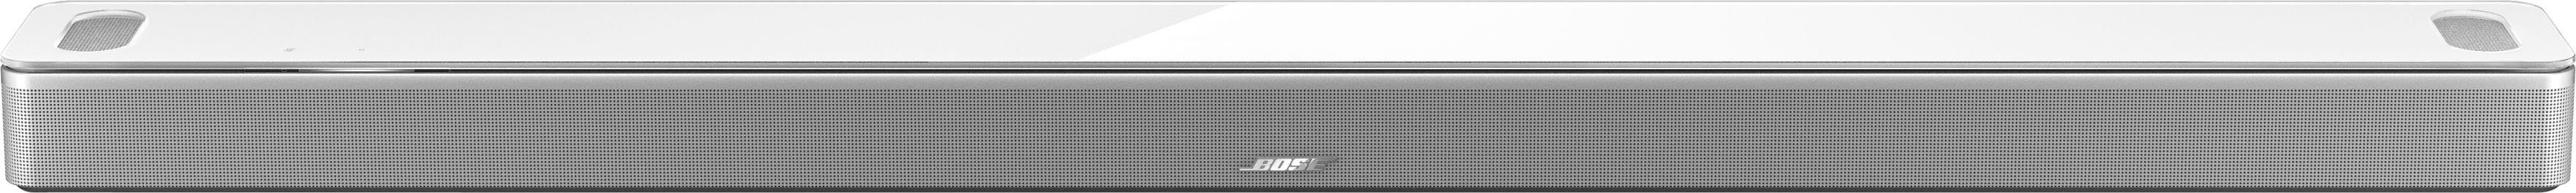 Bose Smart Bass Google Assistant) 900 Module Alexa 700 Amazon Soundbar Soundbar LAN + und (Ethernet), (Bluetooth, mit weiss